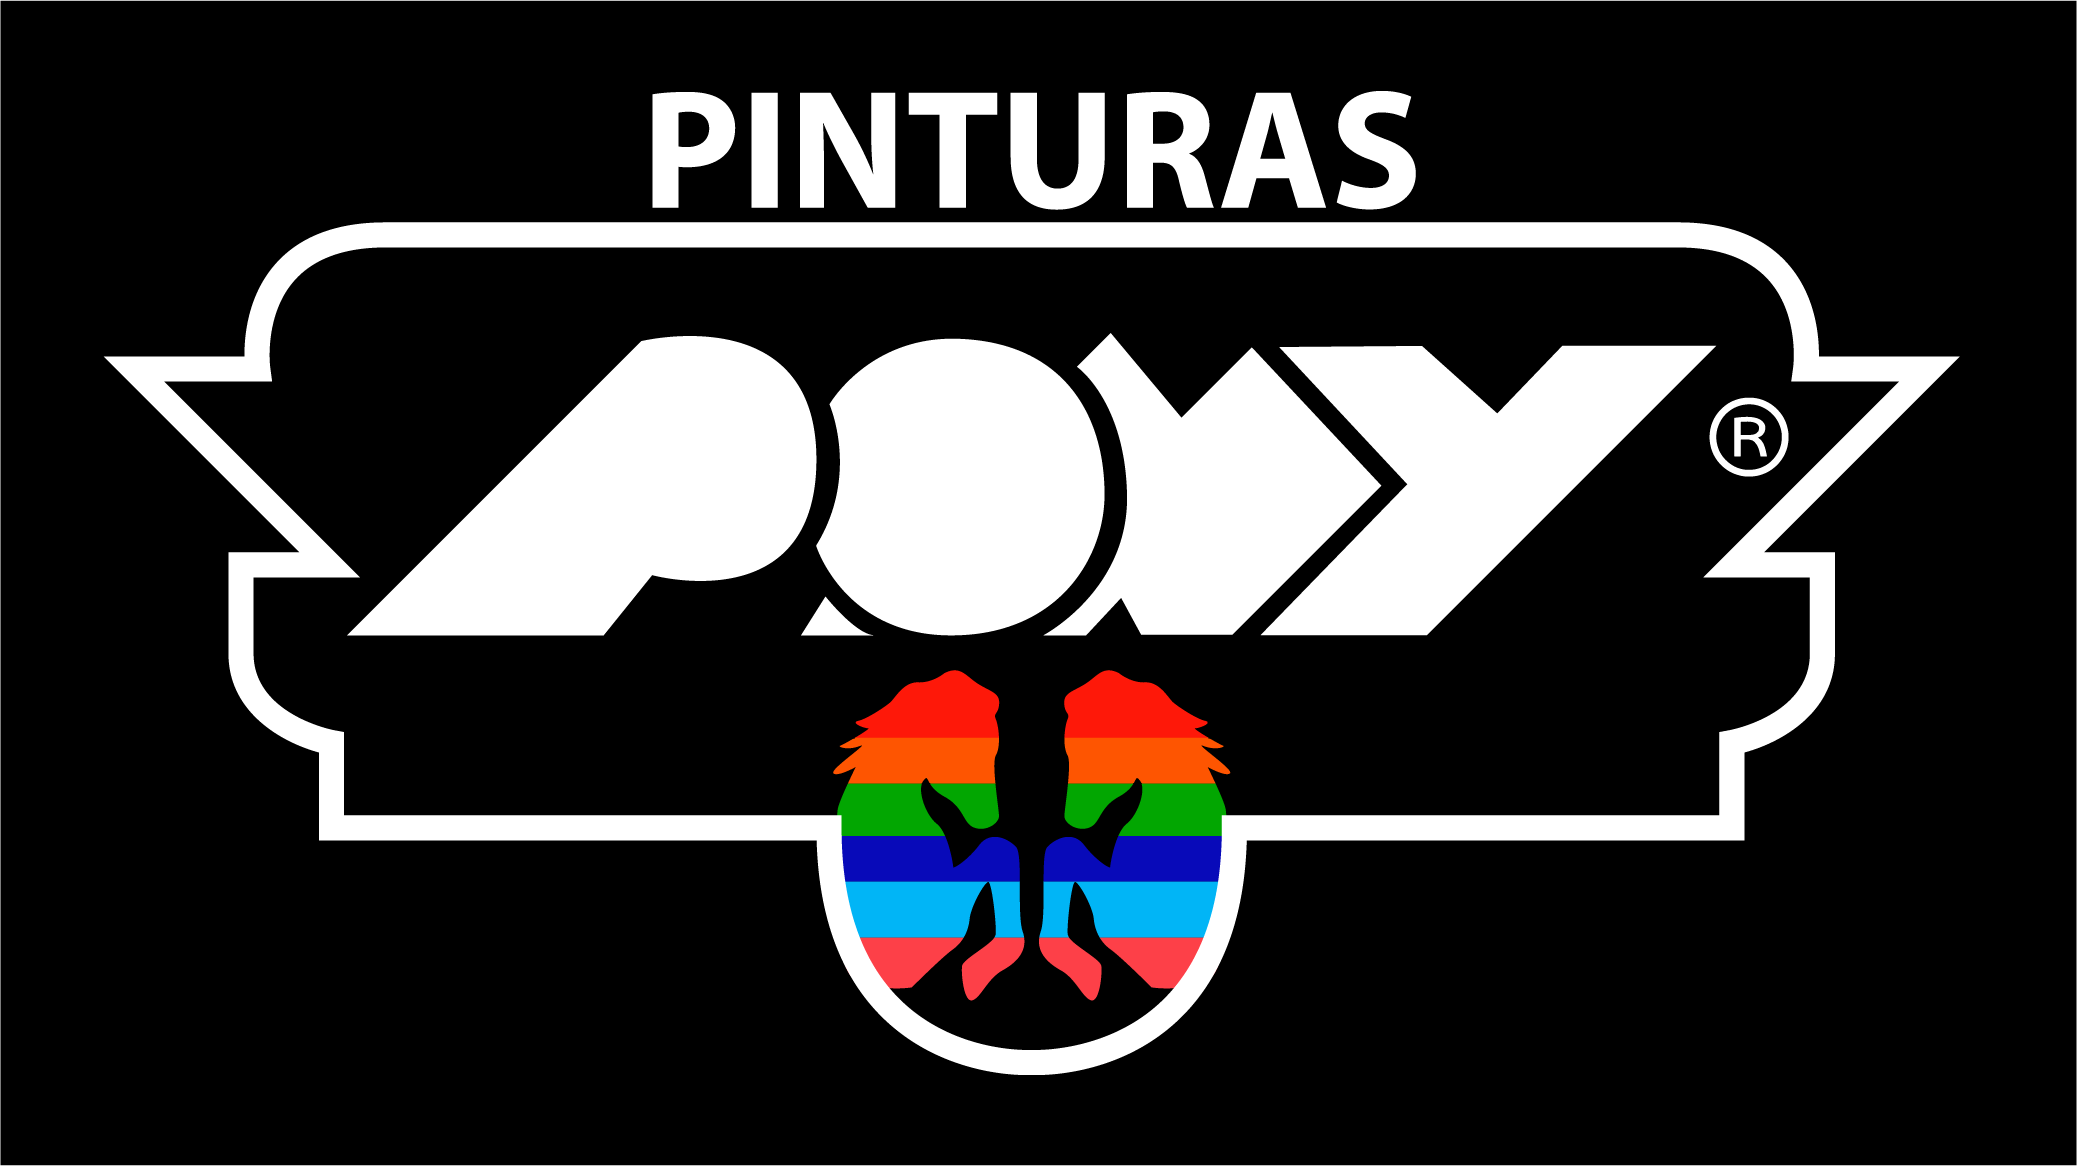 PINTURAS PONY